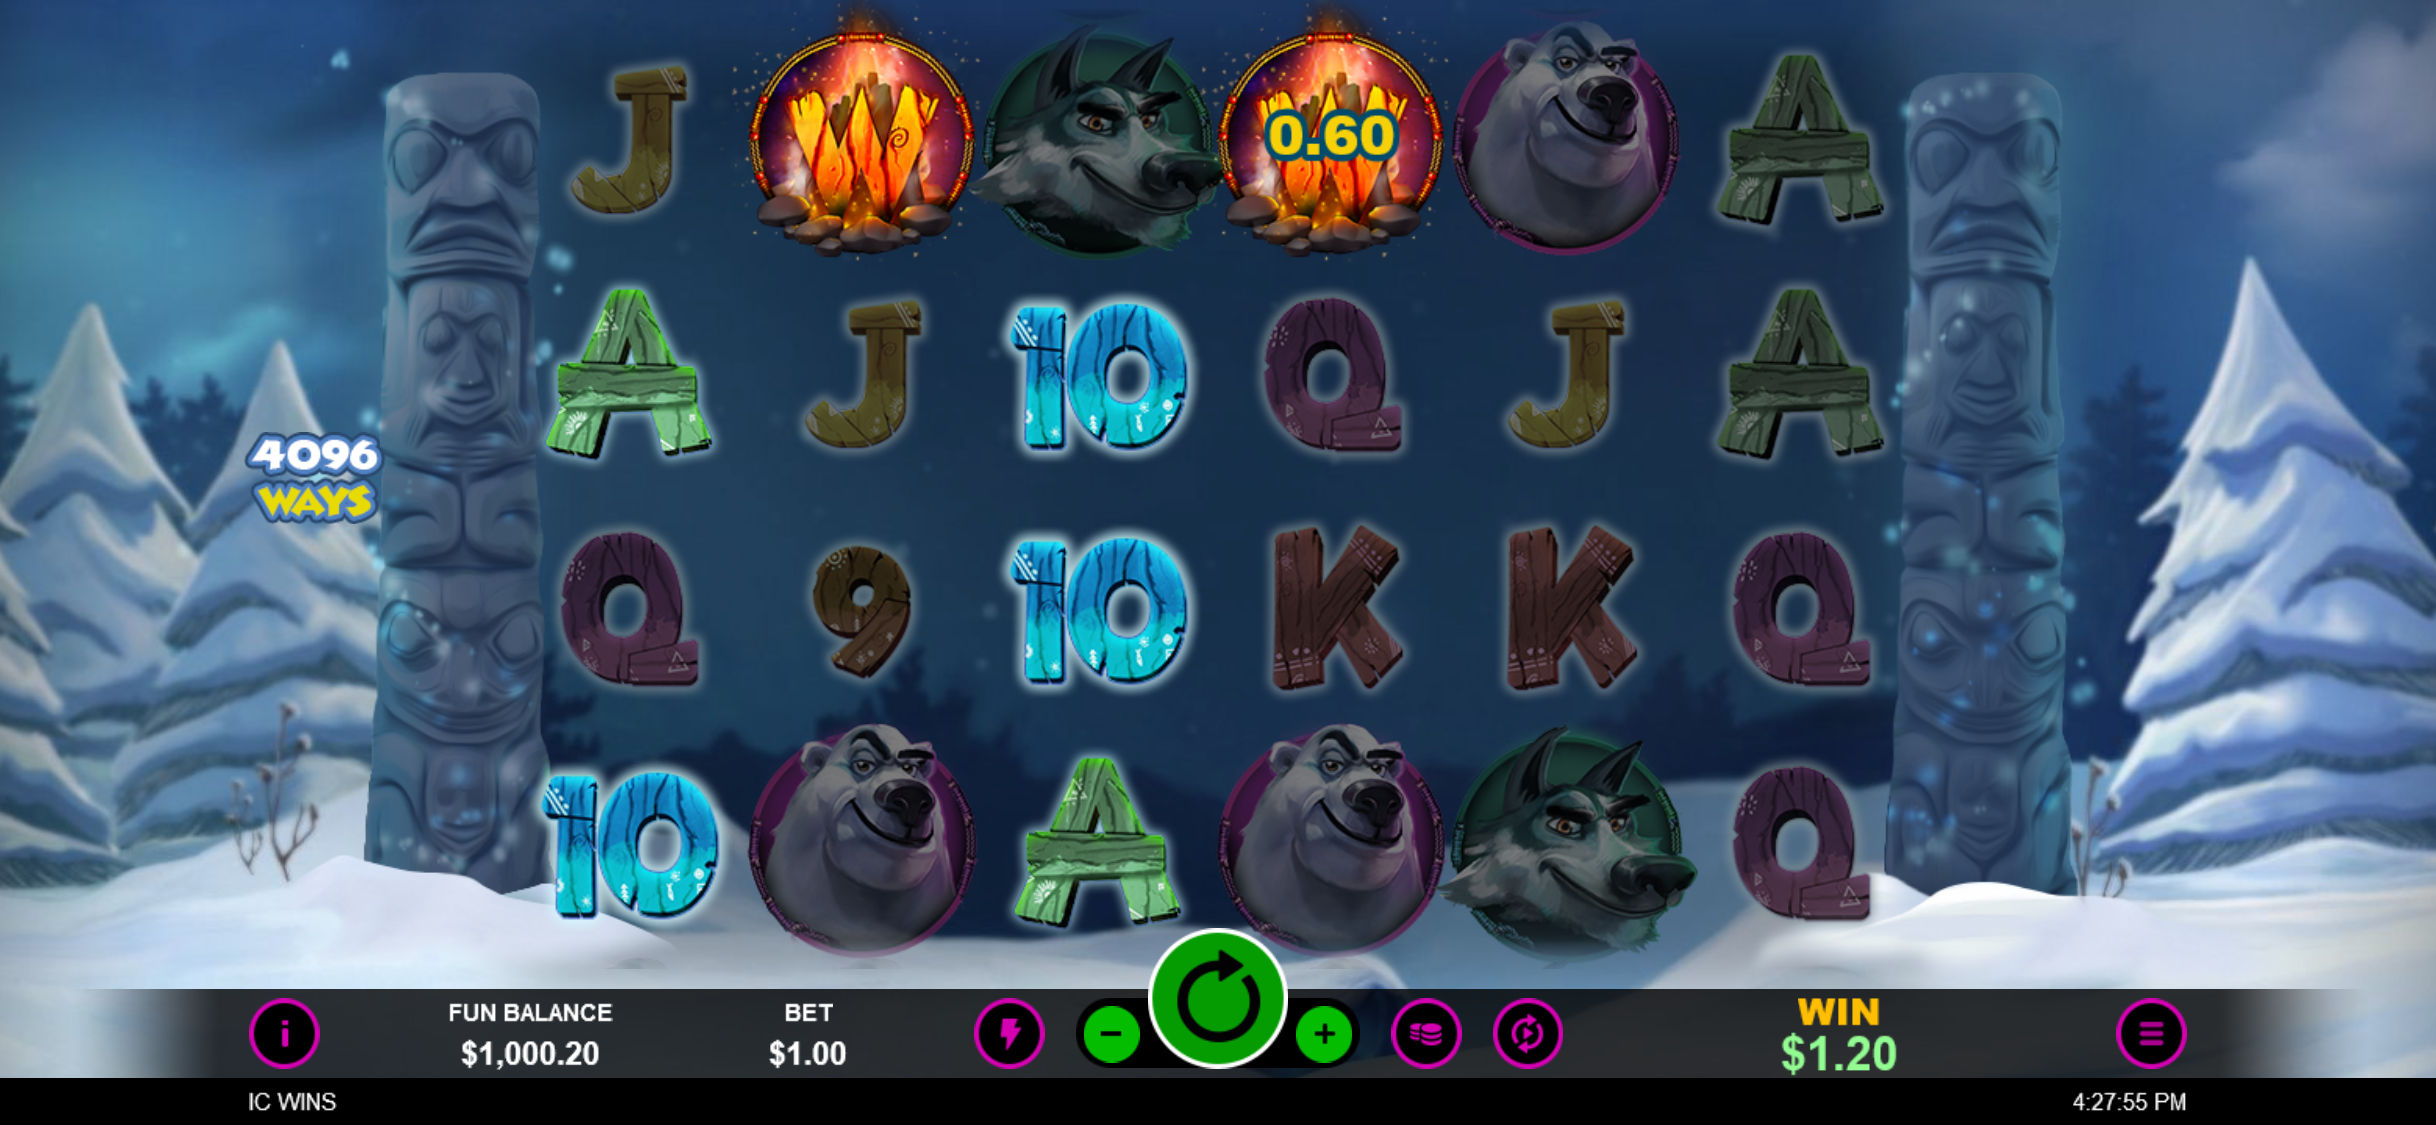 Diamond Reels Casino Mobile Slot Games Review